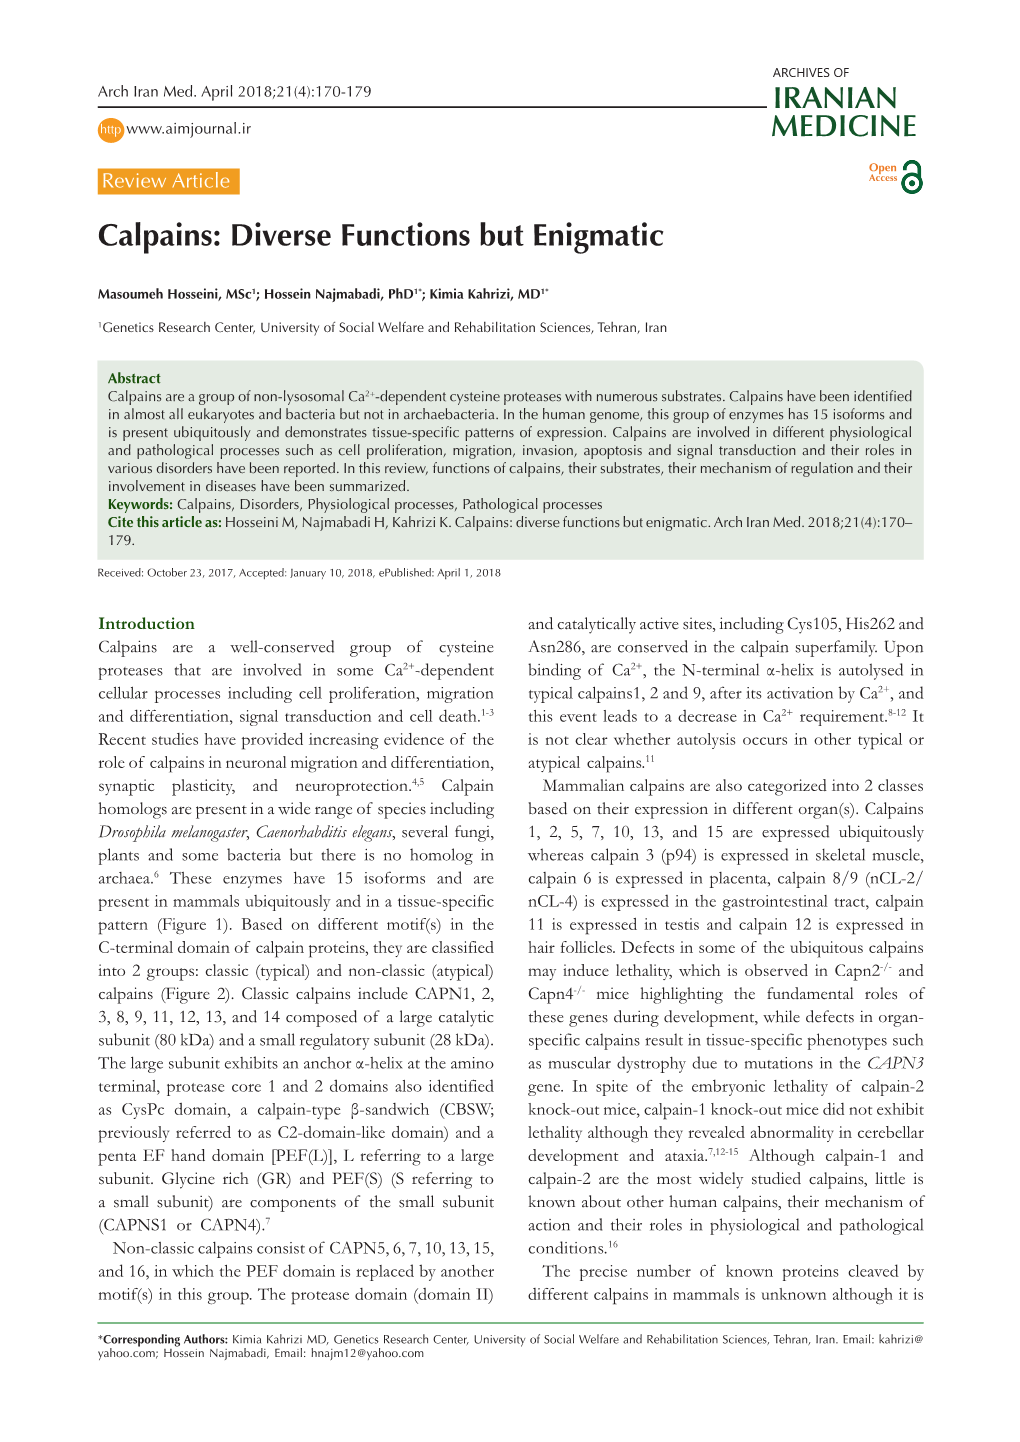 Calpains: Diverse Functions but Enigmatic